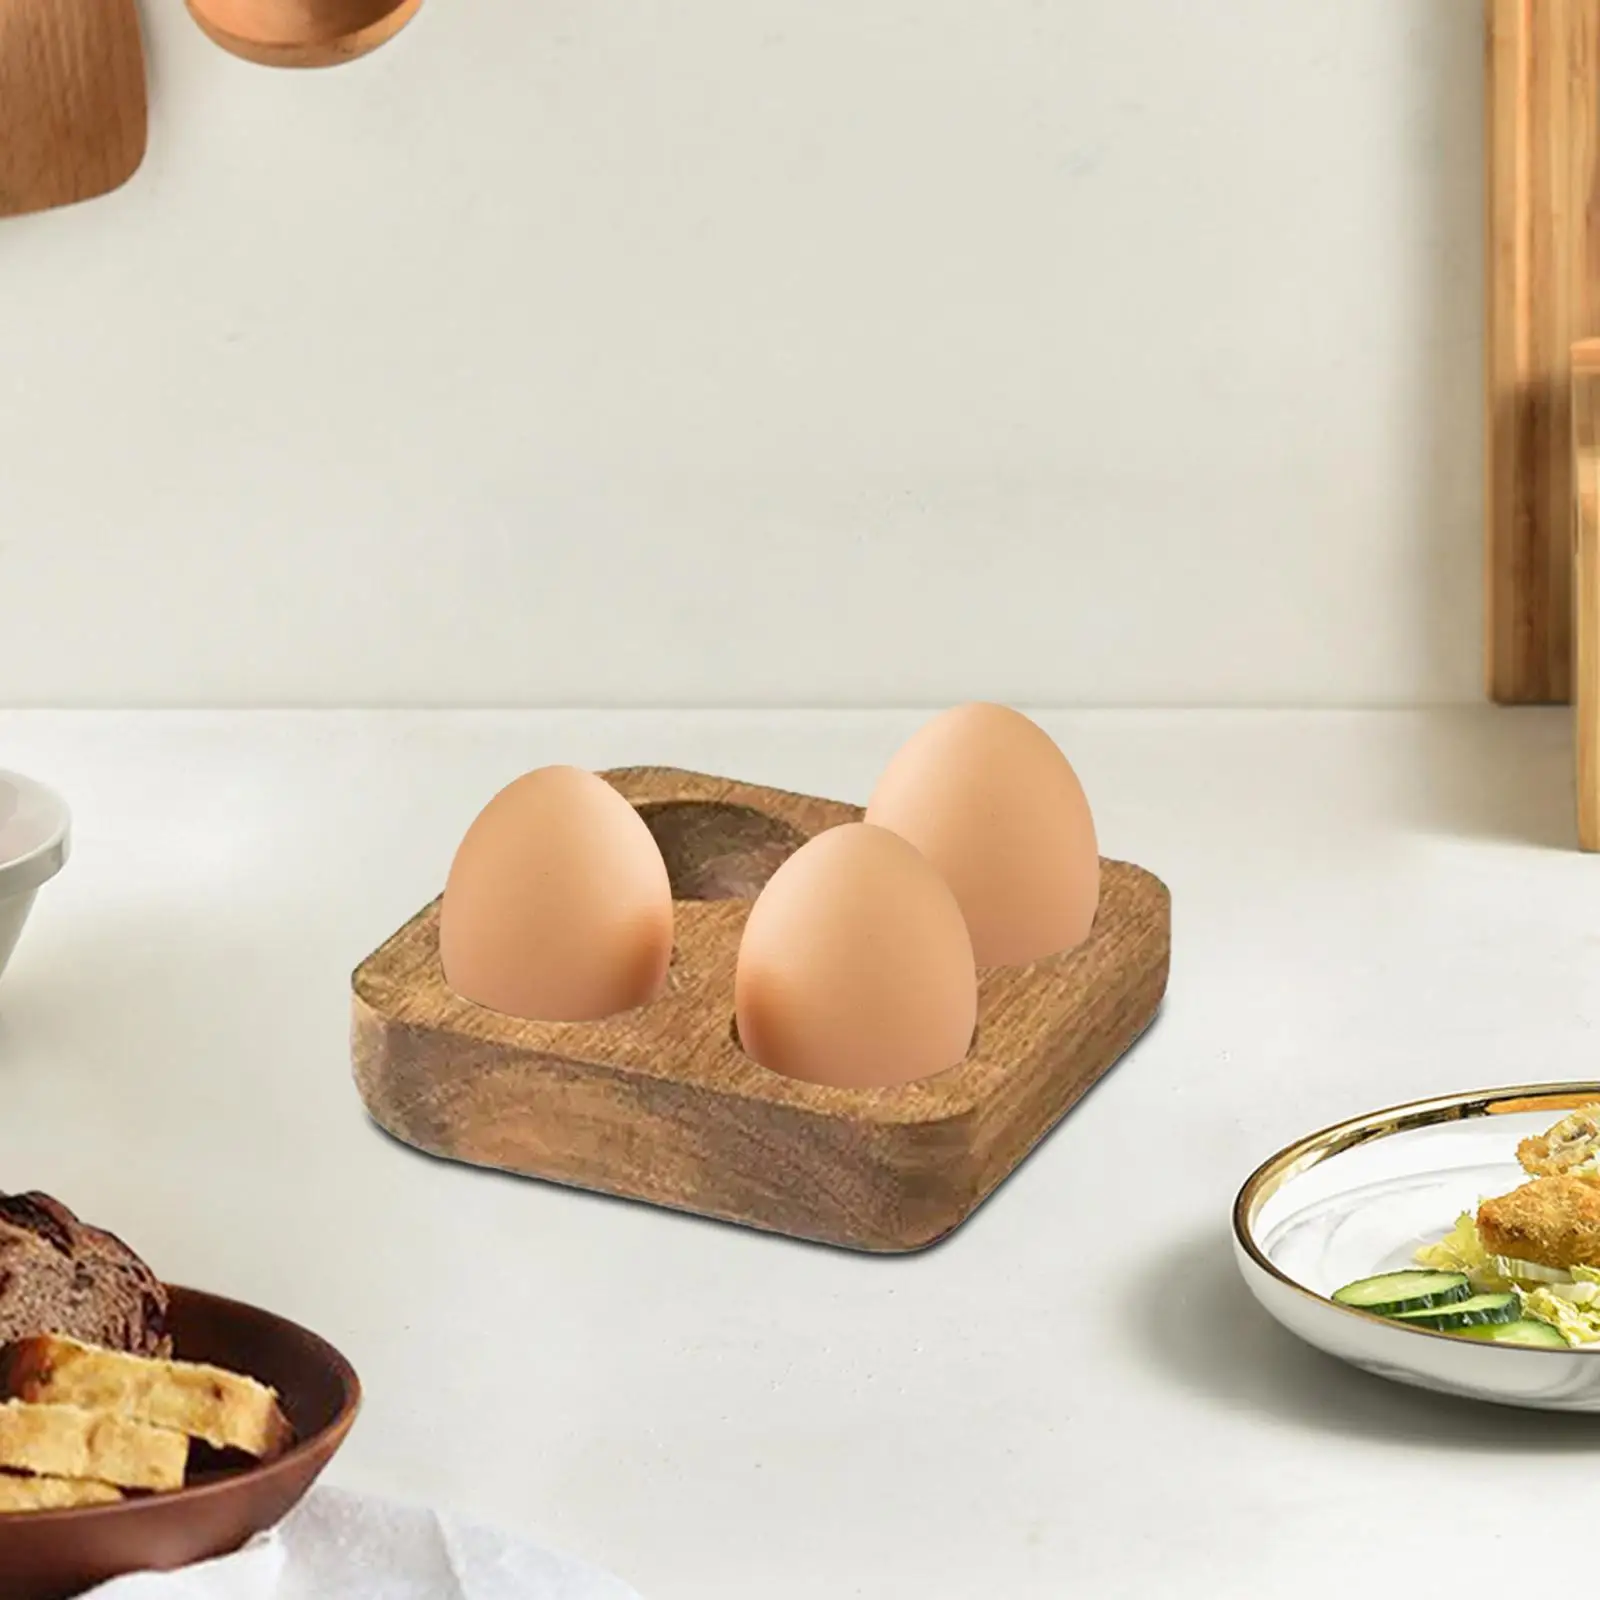 Egg Holder Double Row 4 Grid Portable Egg Tray Egg Organizer Rack for Countertop Refrigerator Household Supermarket Pantry